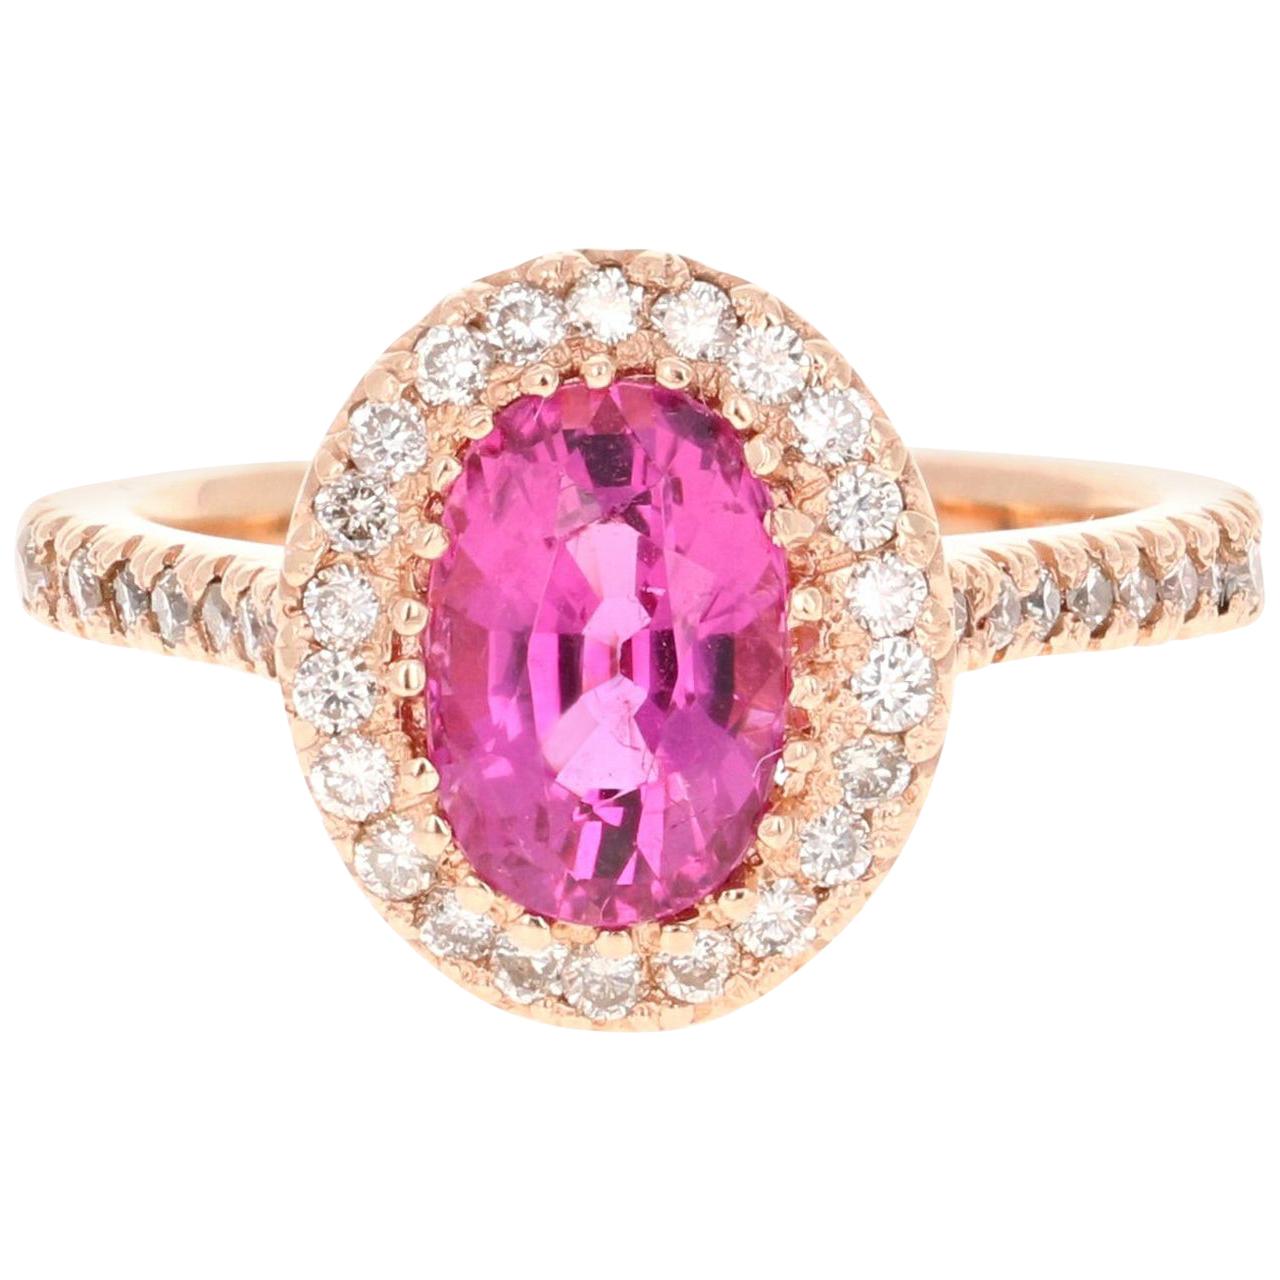 Verlobungsring aus 14 Karat Roségold mit 2,62 Karat rosa Turmalin und Diamant